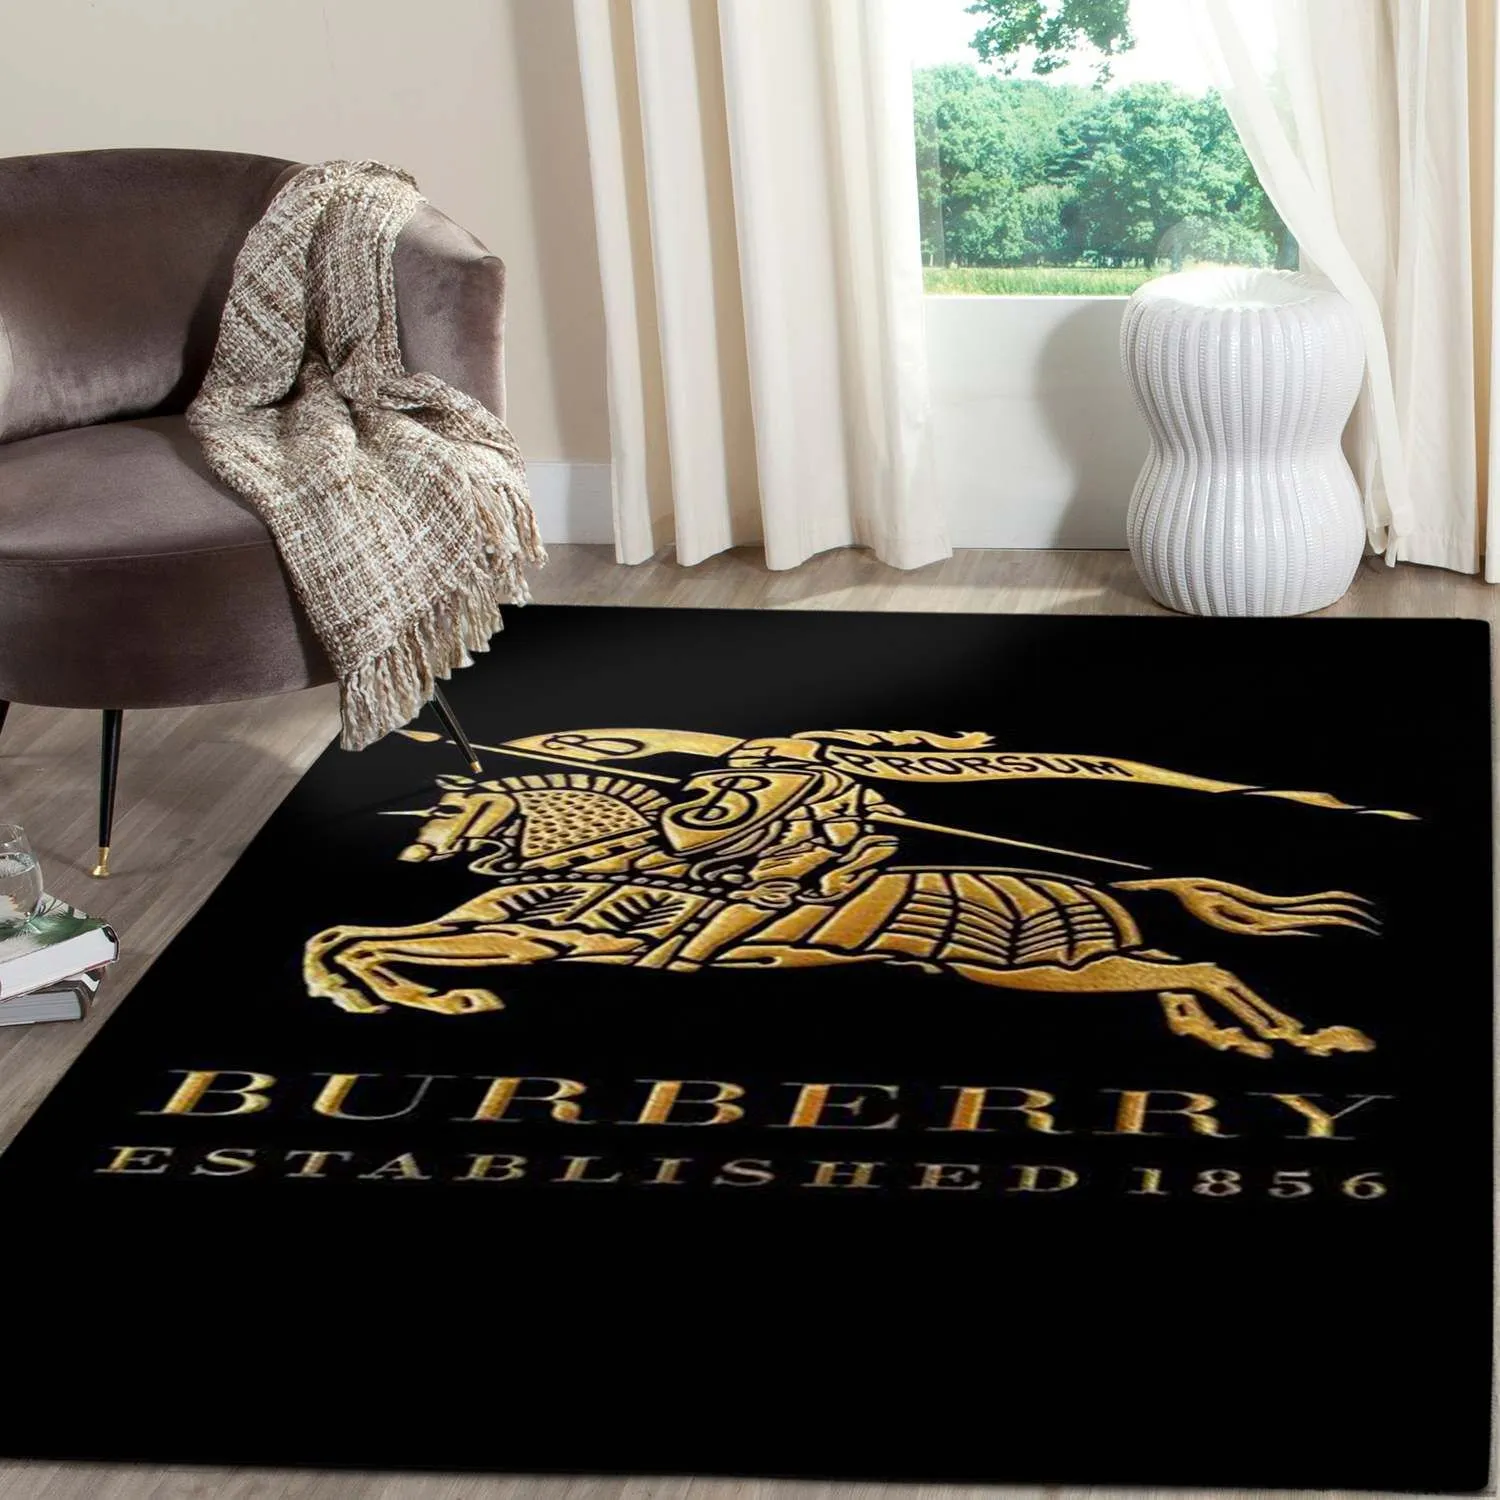 Burberry big Rectangle Rug Door Mat Fashion Brand Luxury Home Decor Area Carpet